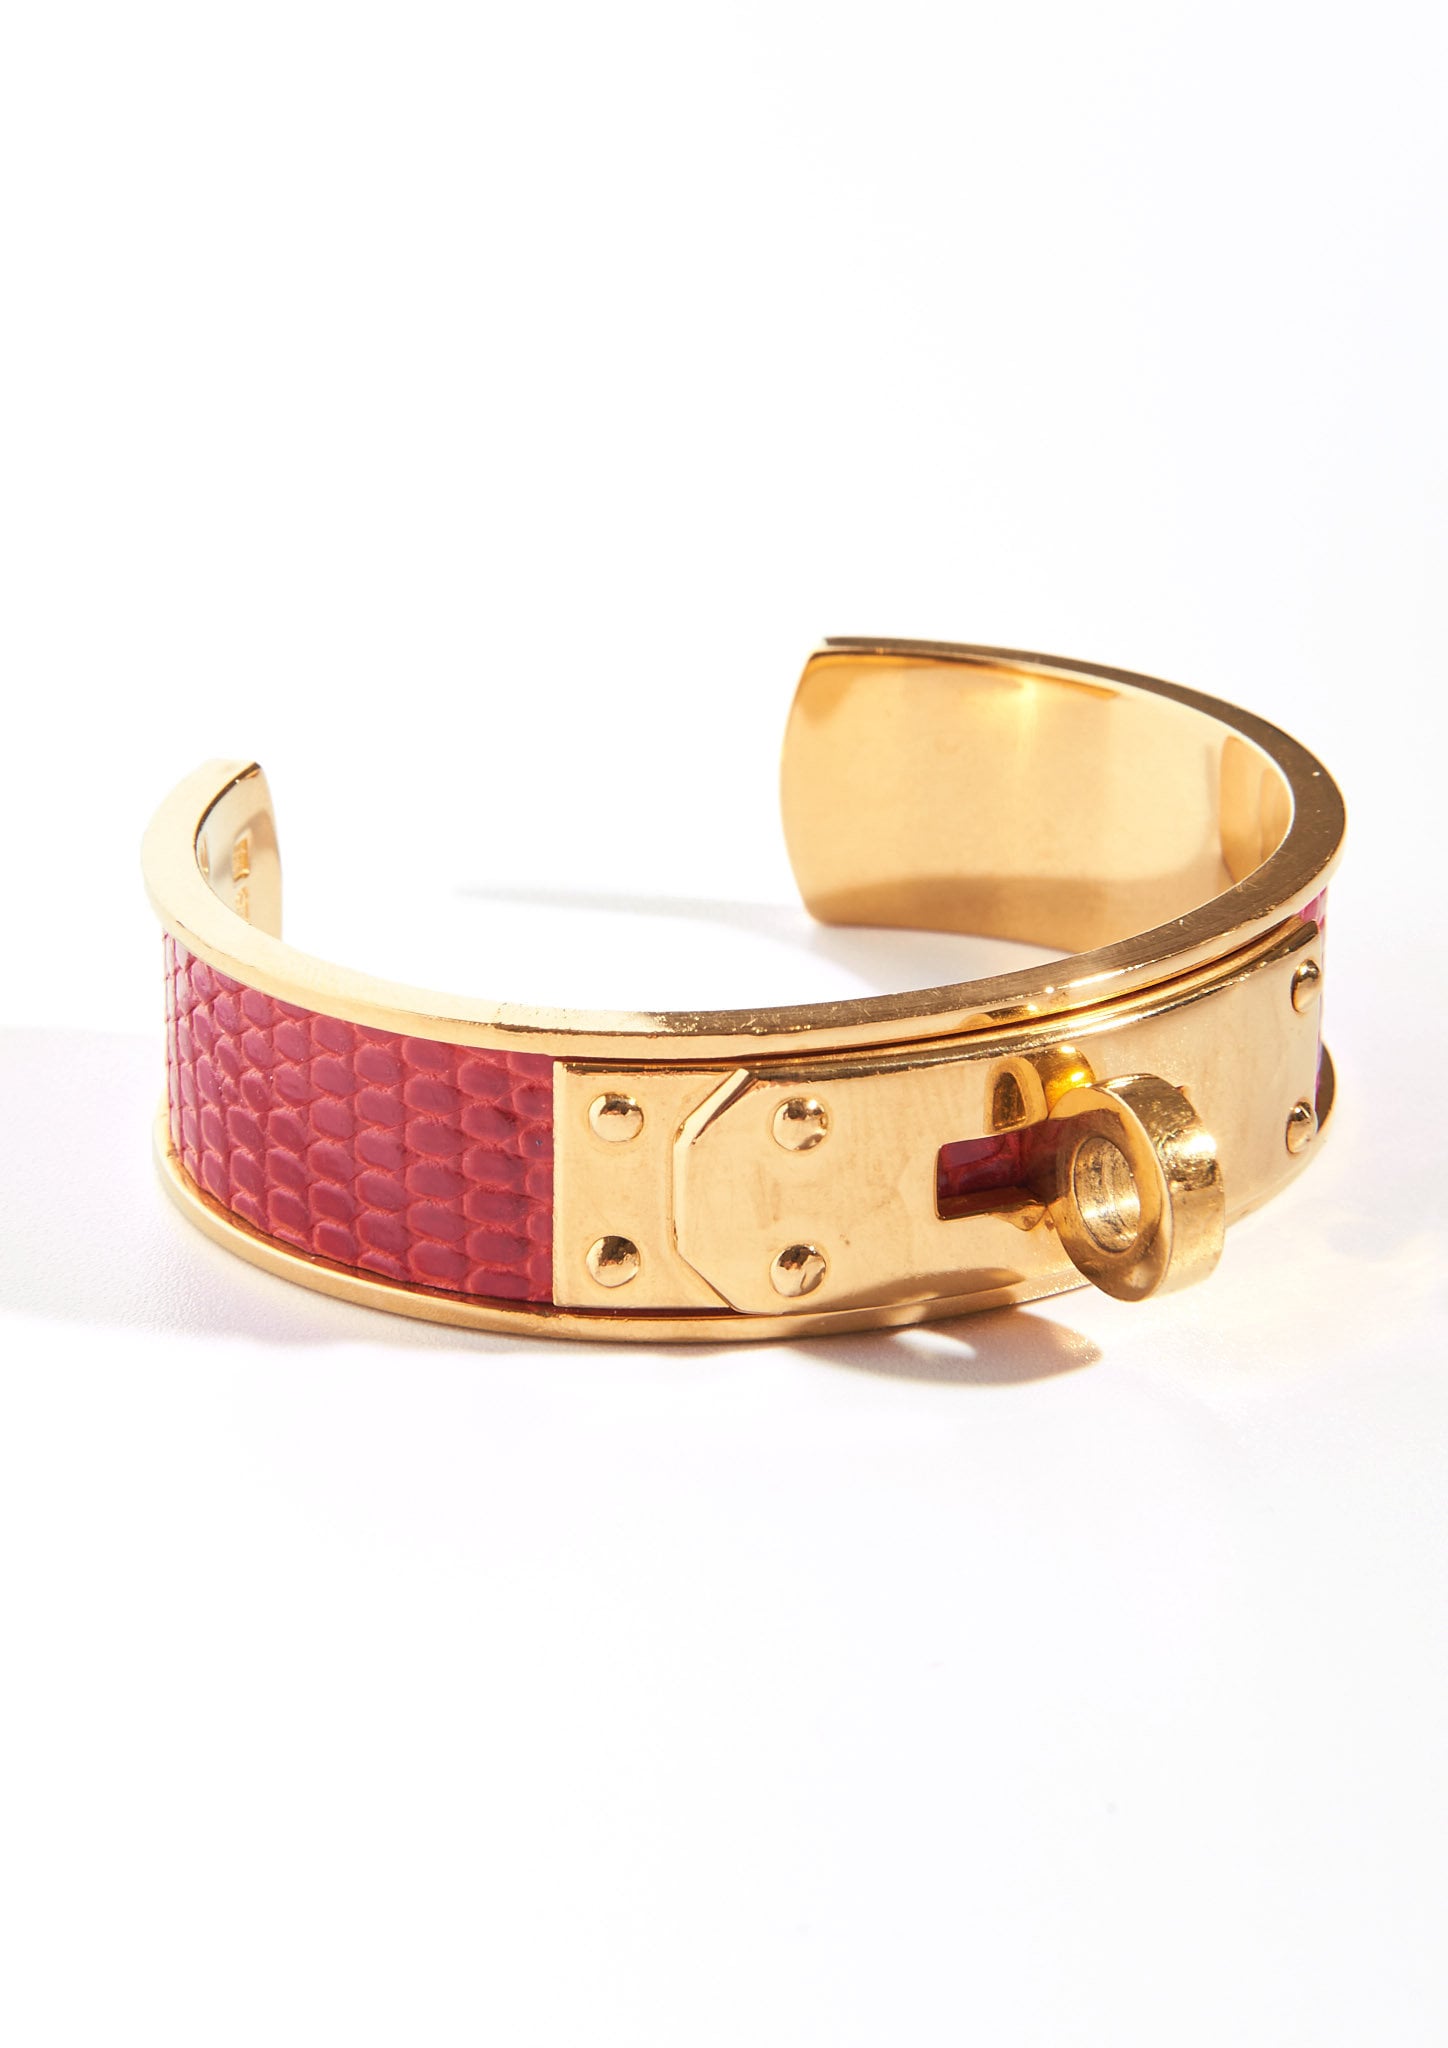 Hermes Bracelets - Buy Hermes Bracelets - Delhi India - Dilli Bazar